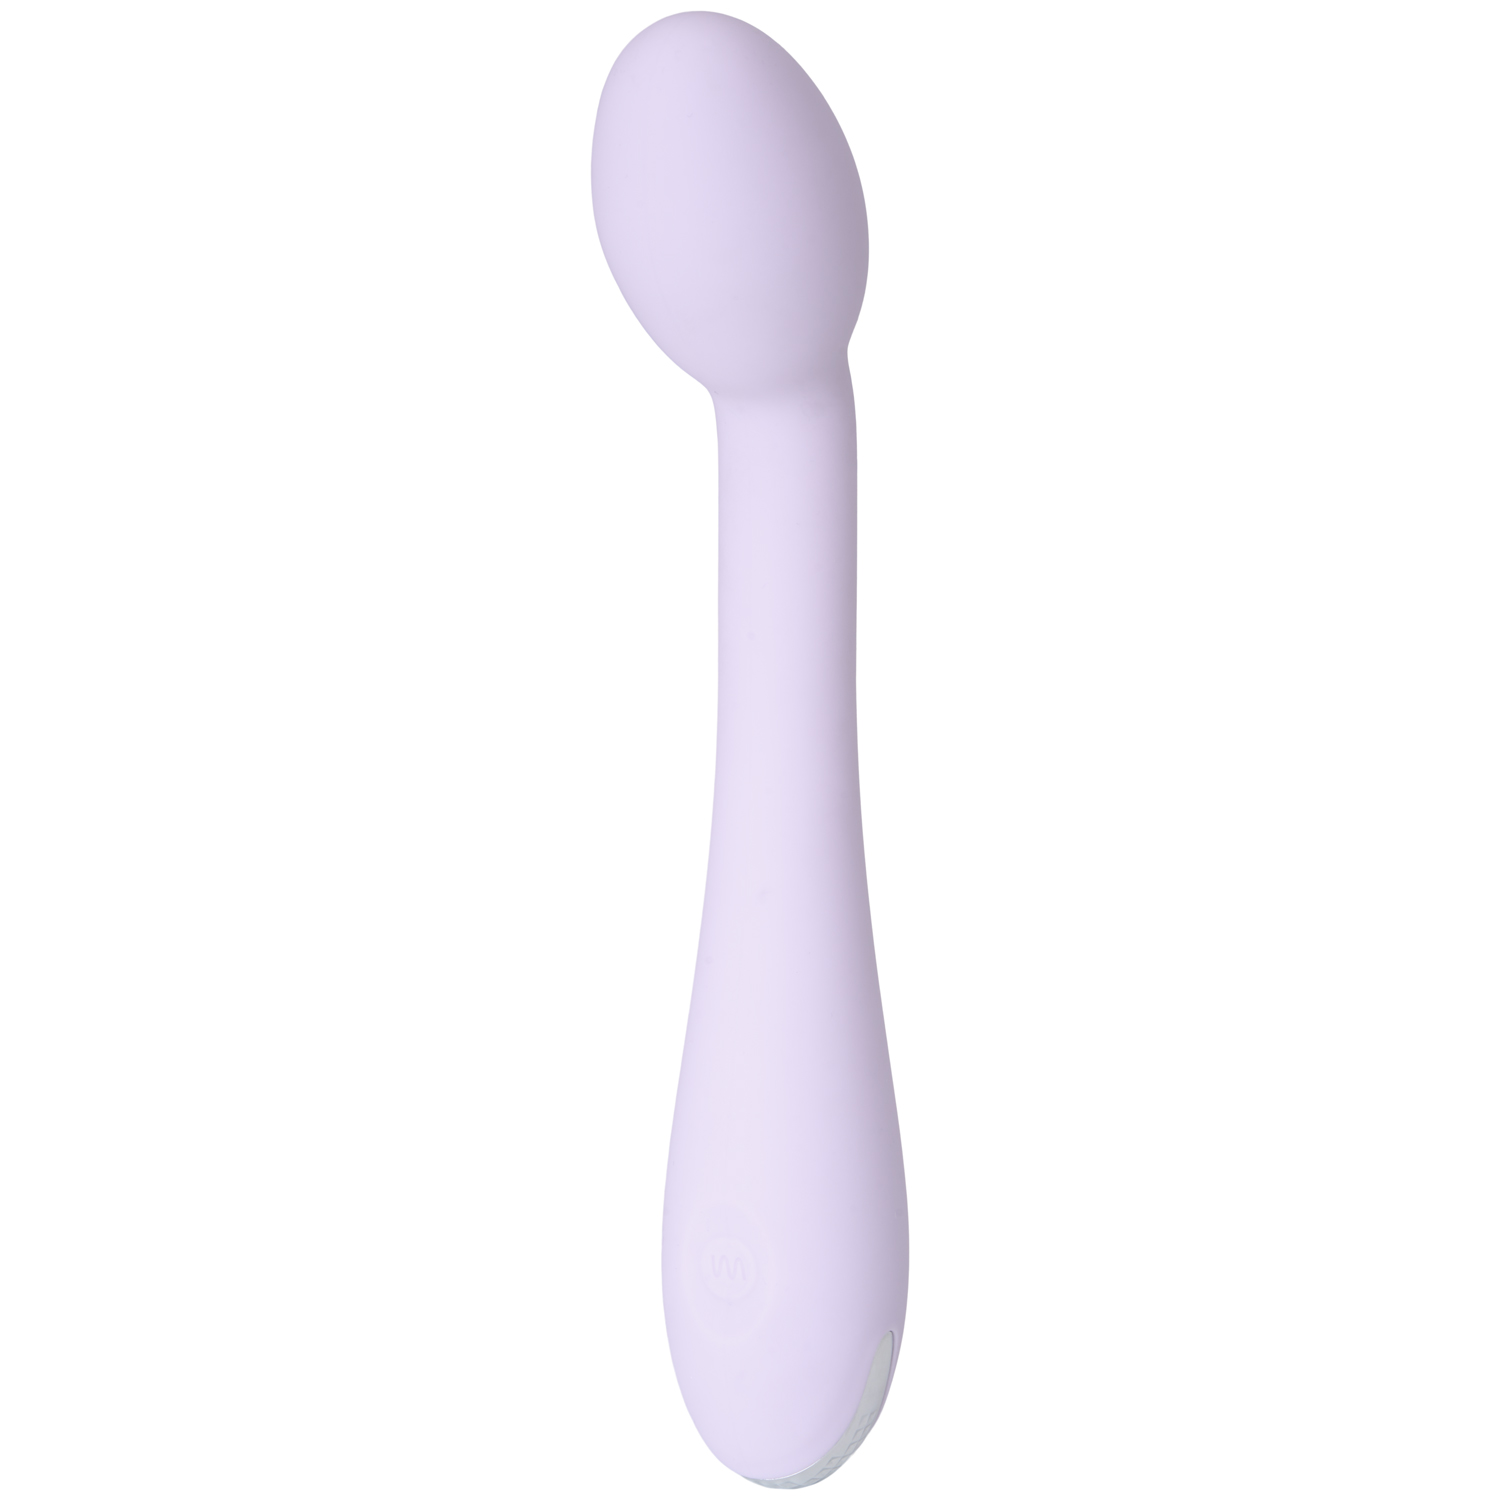 Sinful Slim Lavendel G-punkts Vibrator med 12 Hastigheder   - Lilla thumbnail